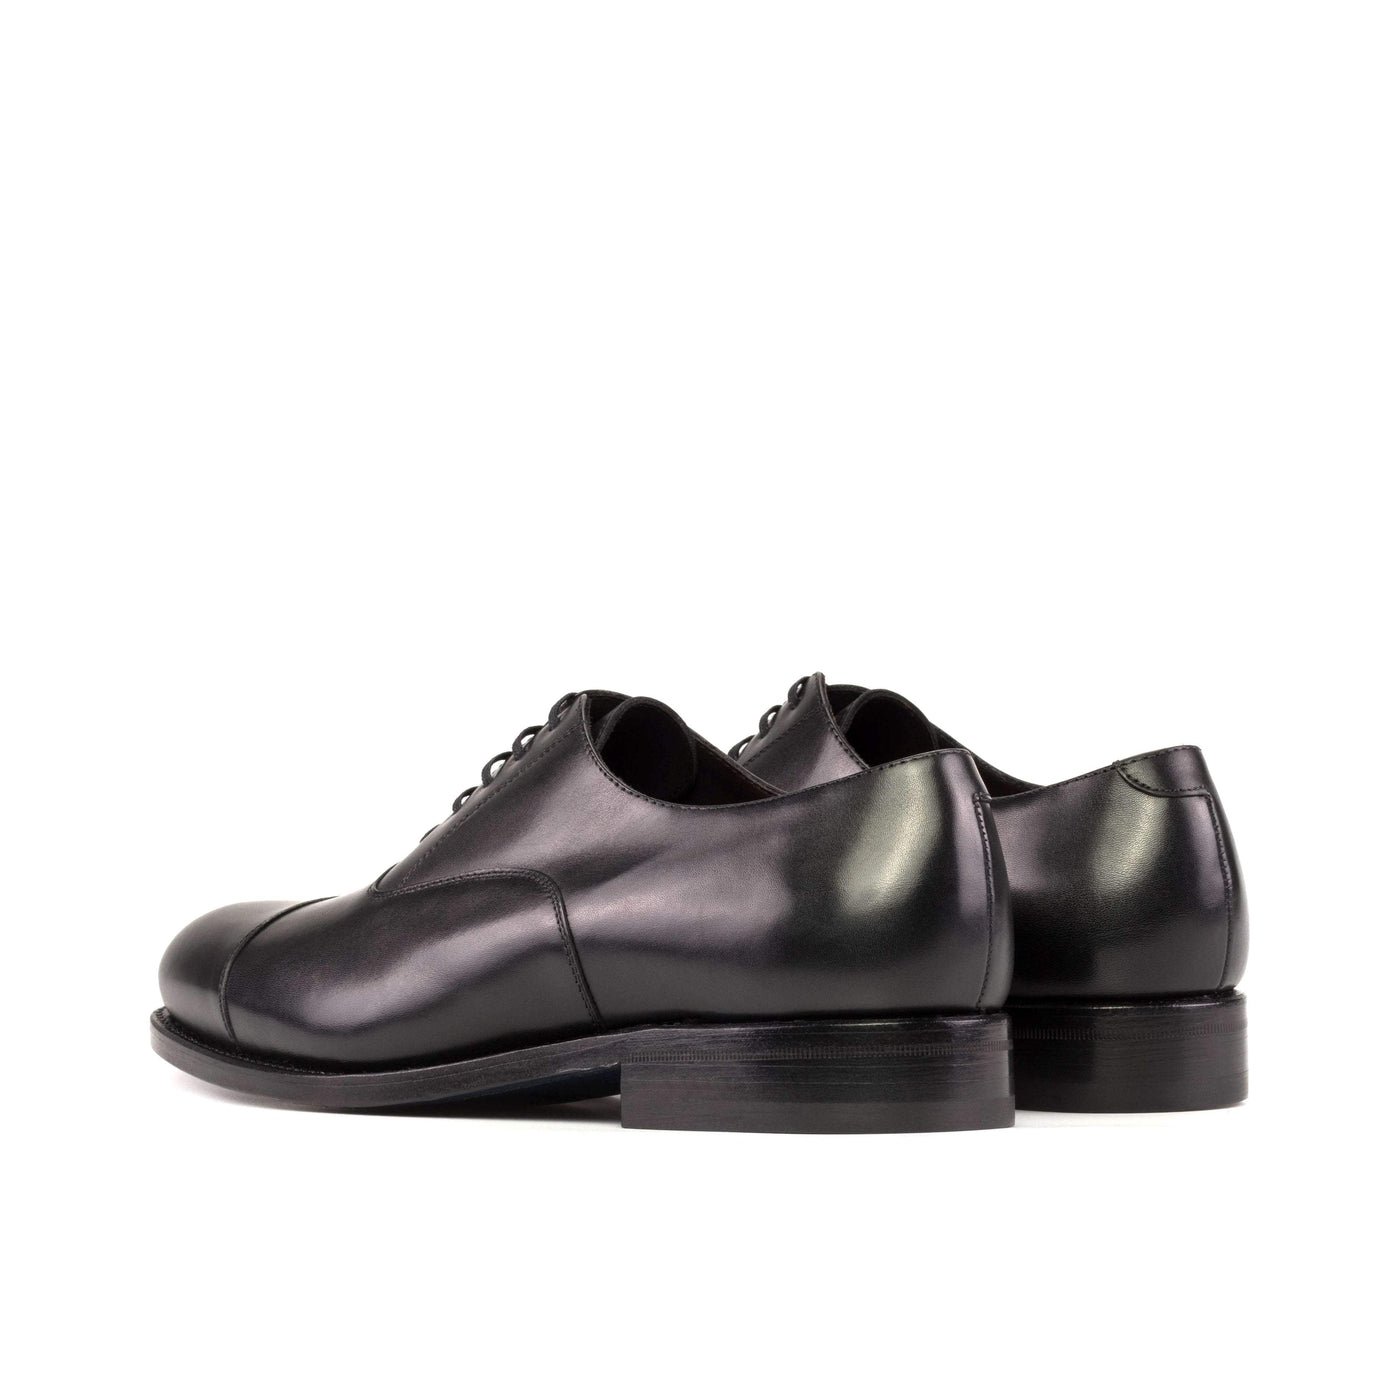 Men's Oxford Shoes Leather Goodyear Welt Black 5267 4- MERRIMIUM